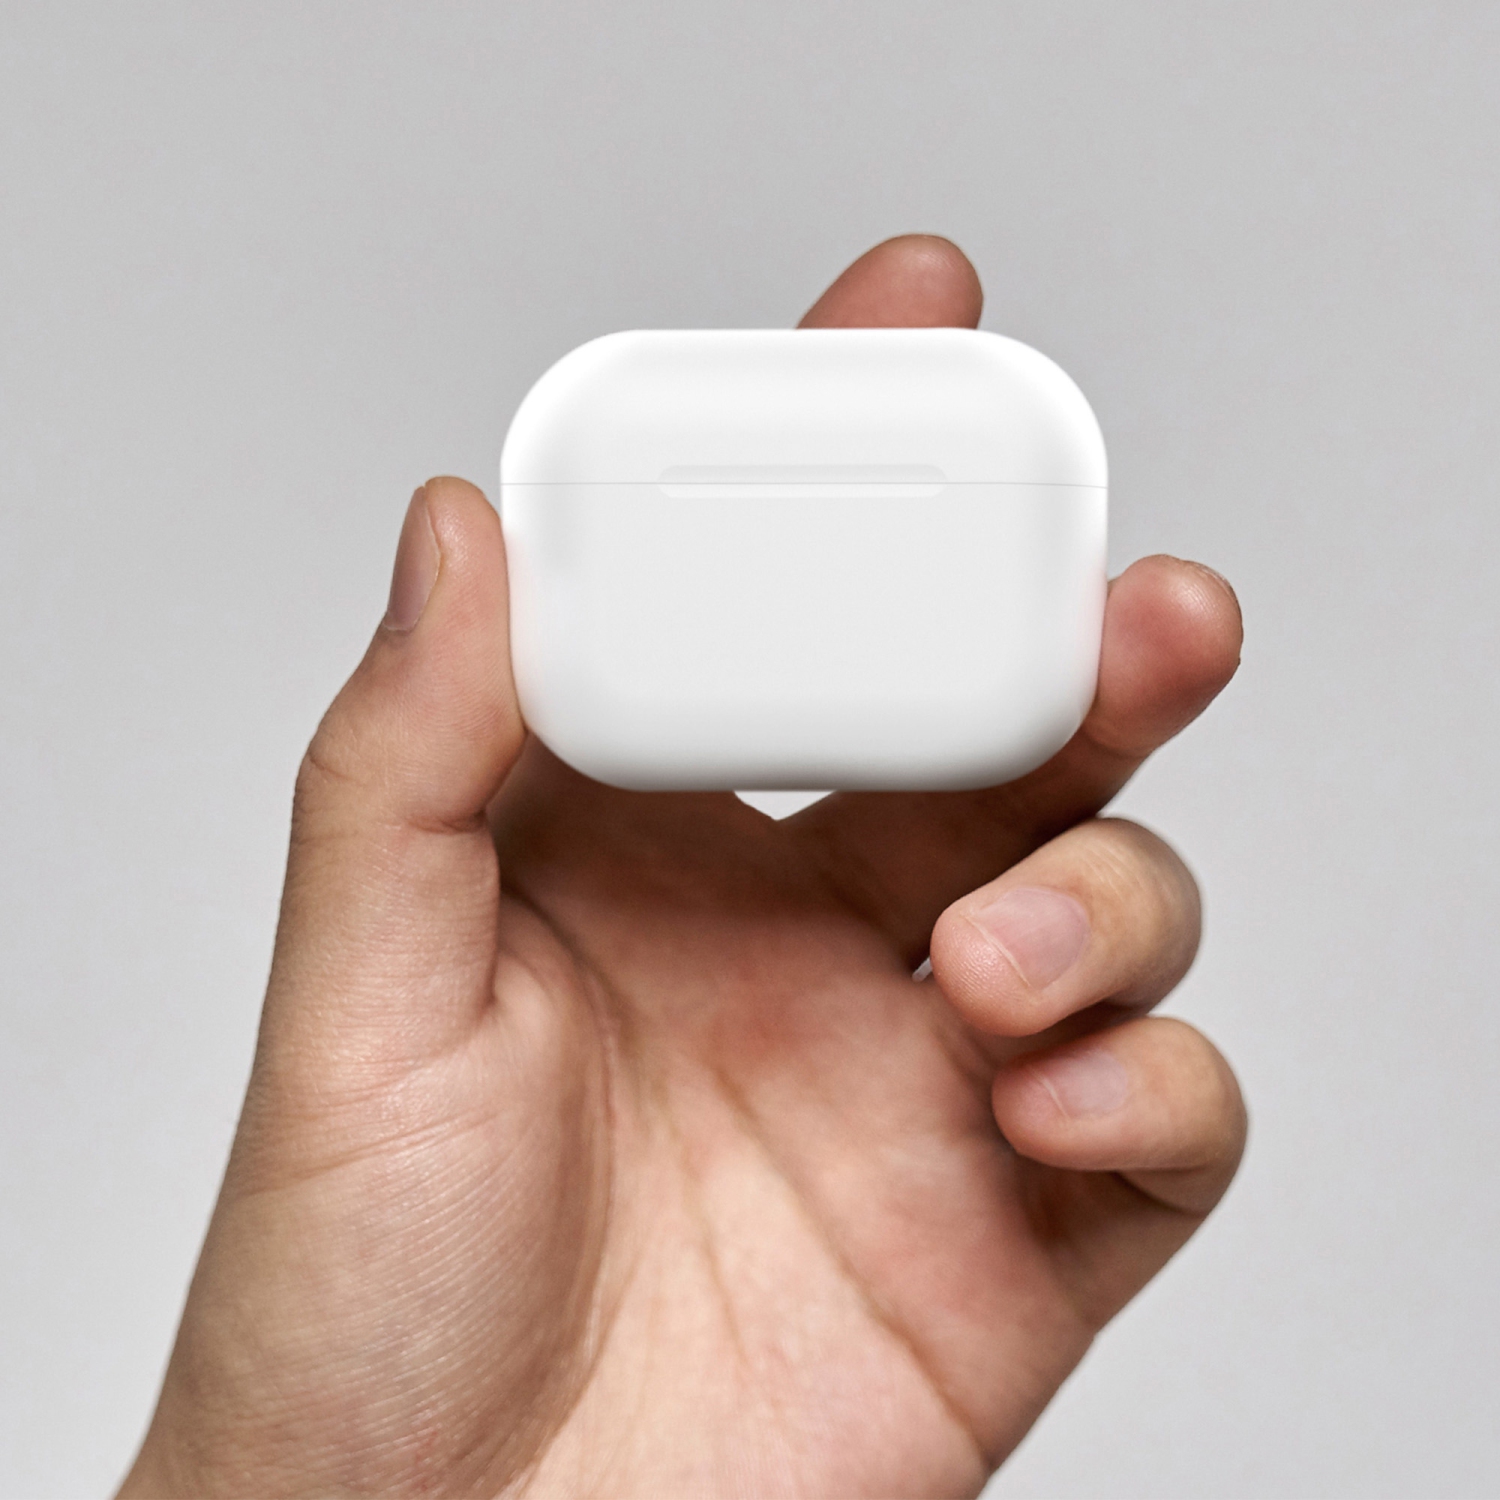 Naztech White Xpods Pro True Wireless Earbuds with Wireless